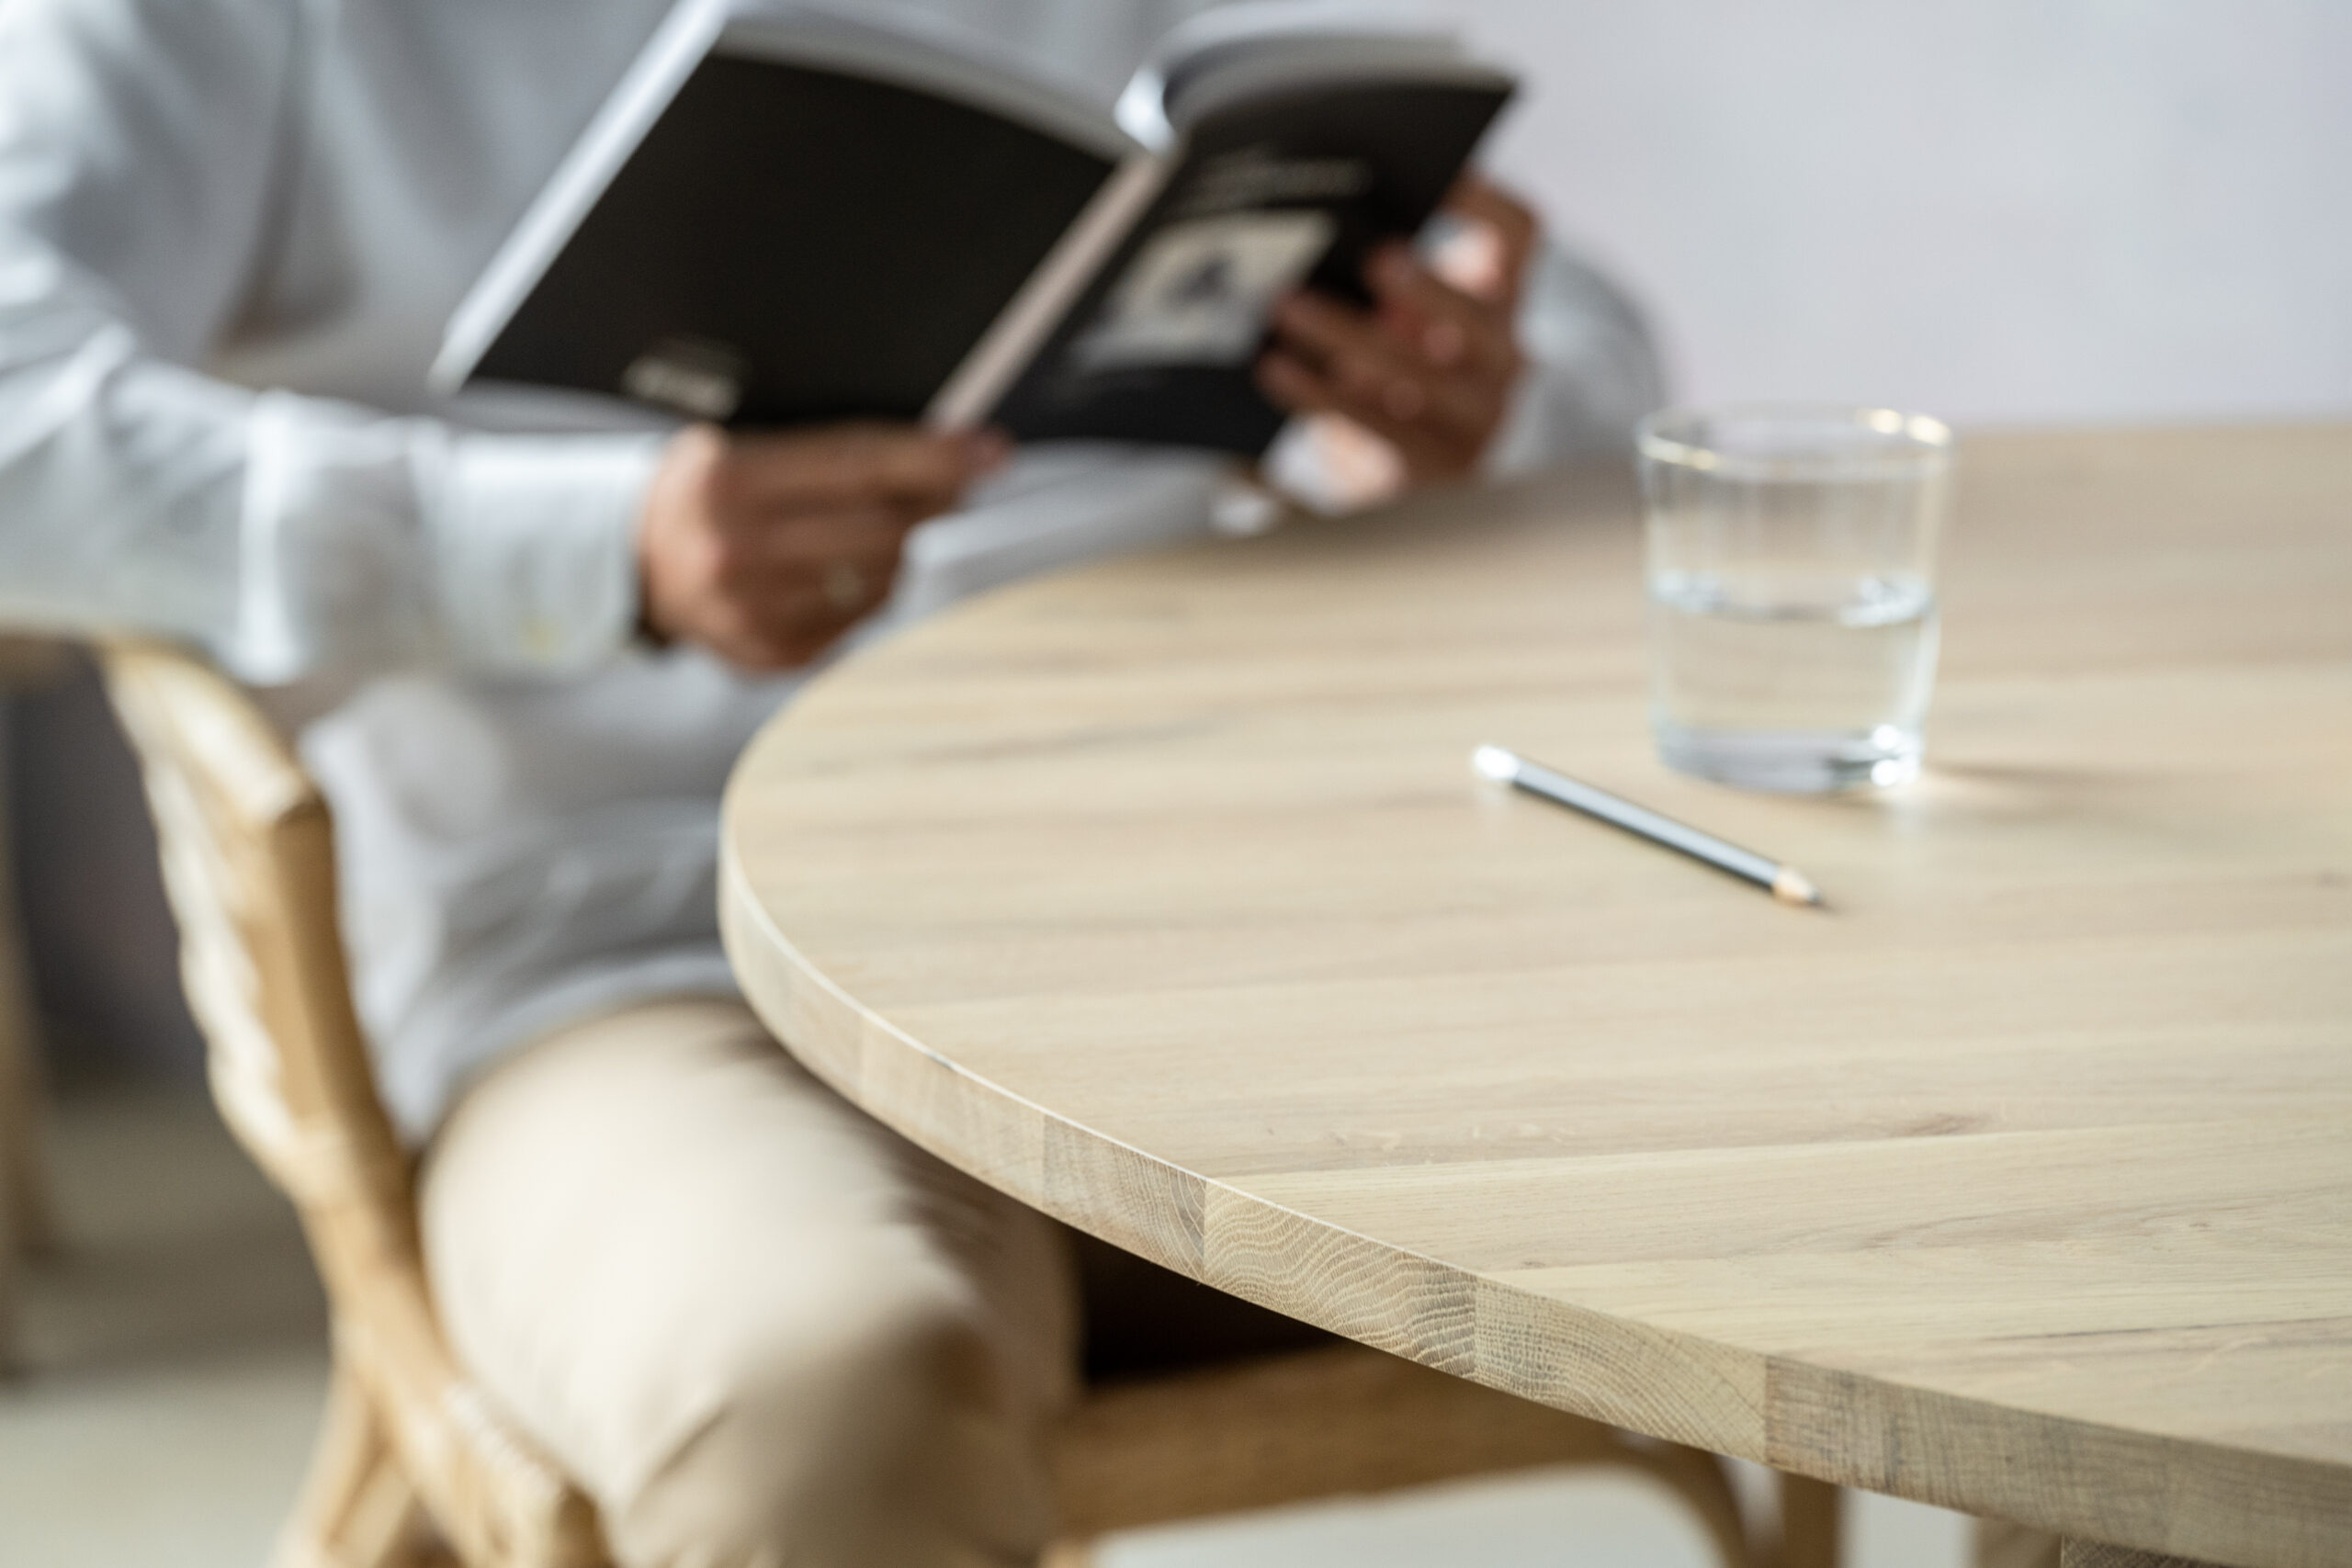 Minimalist boho style dining table with raw oak effect